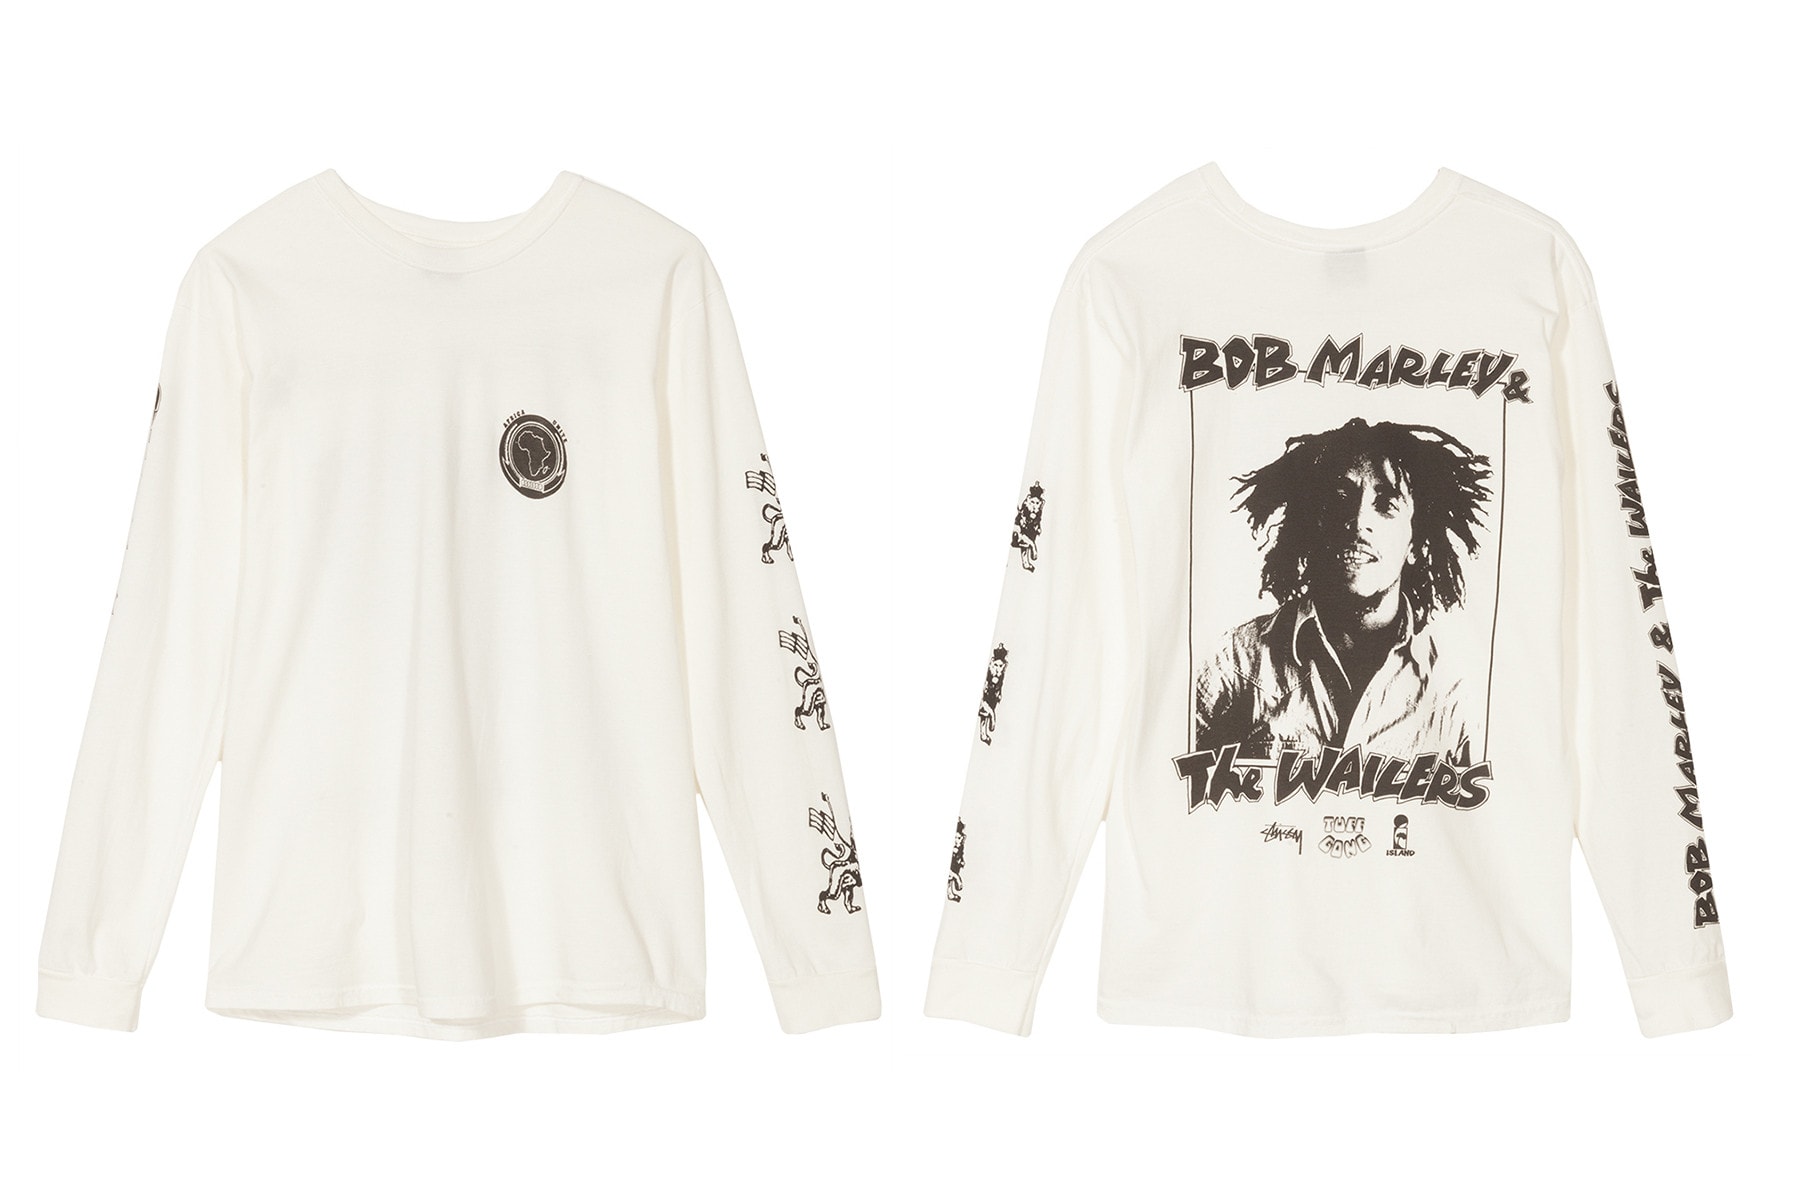 Bob Marley Stussy Collab Spring Summer 2018 Reggae Bob Marley & The Wailers graphic tee shirt july 6 2018 drop release date info